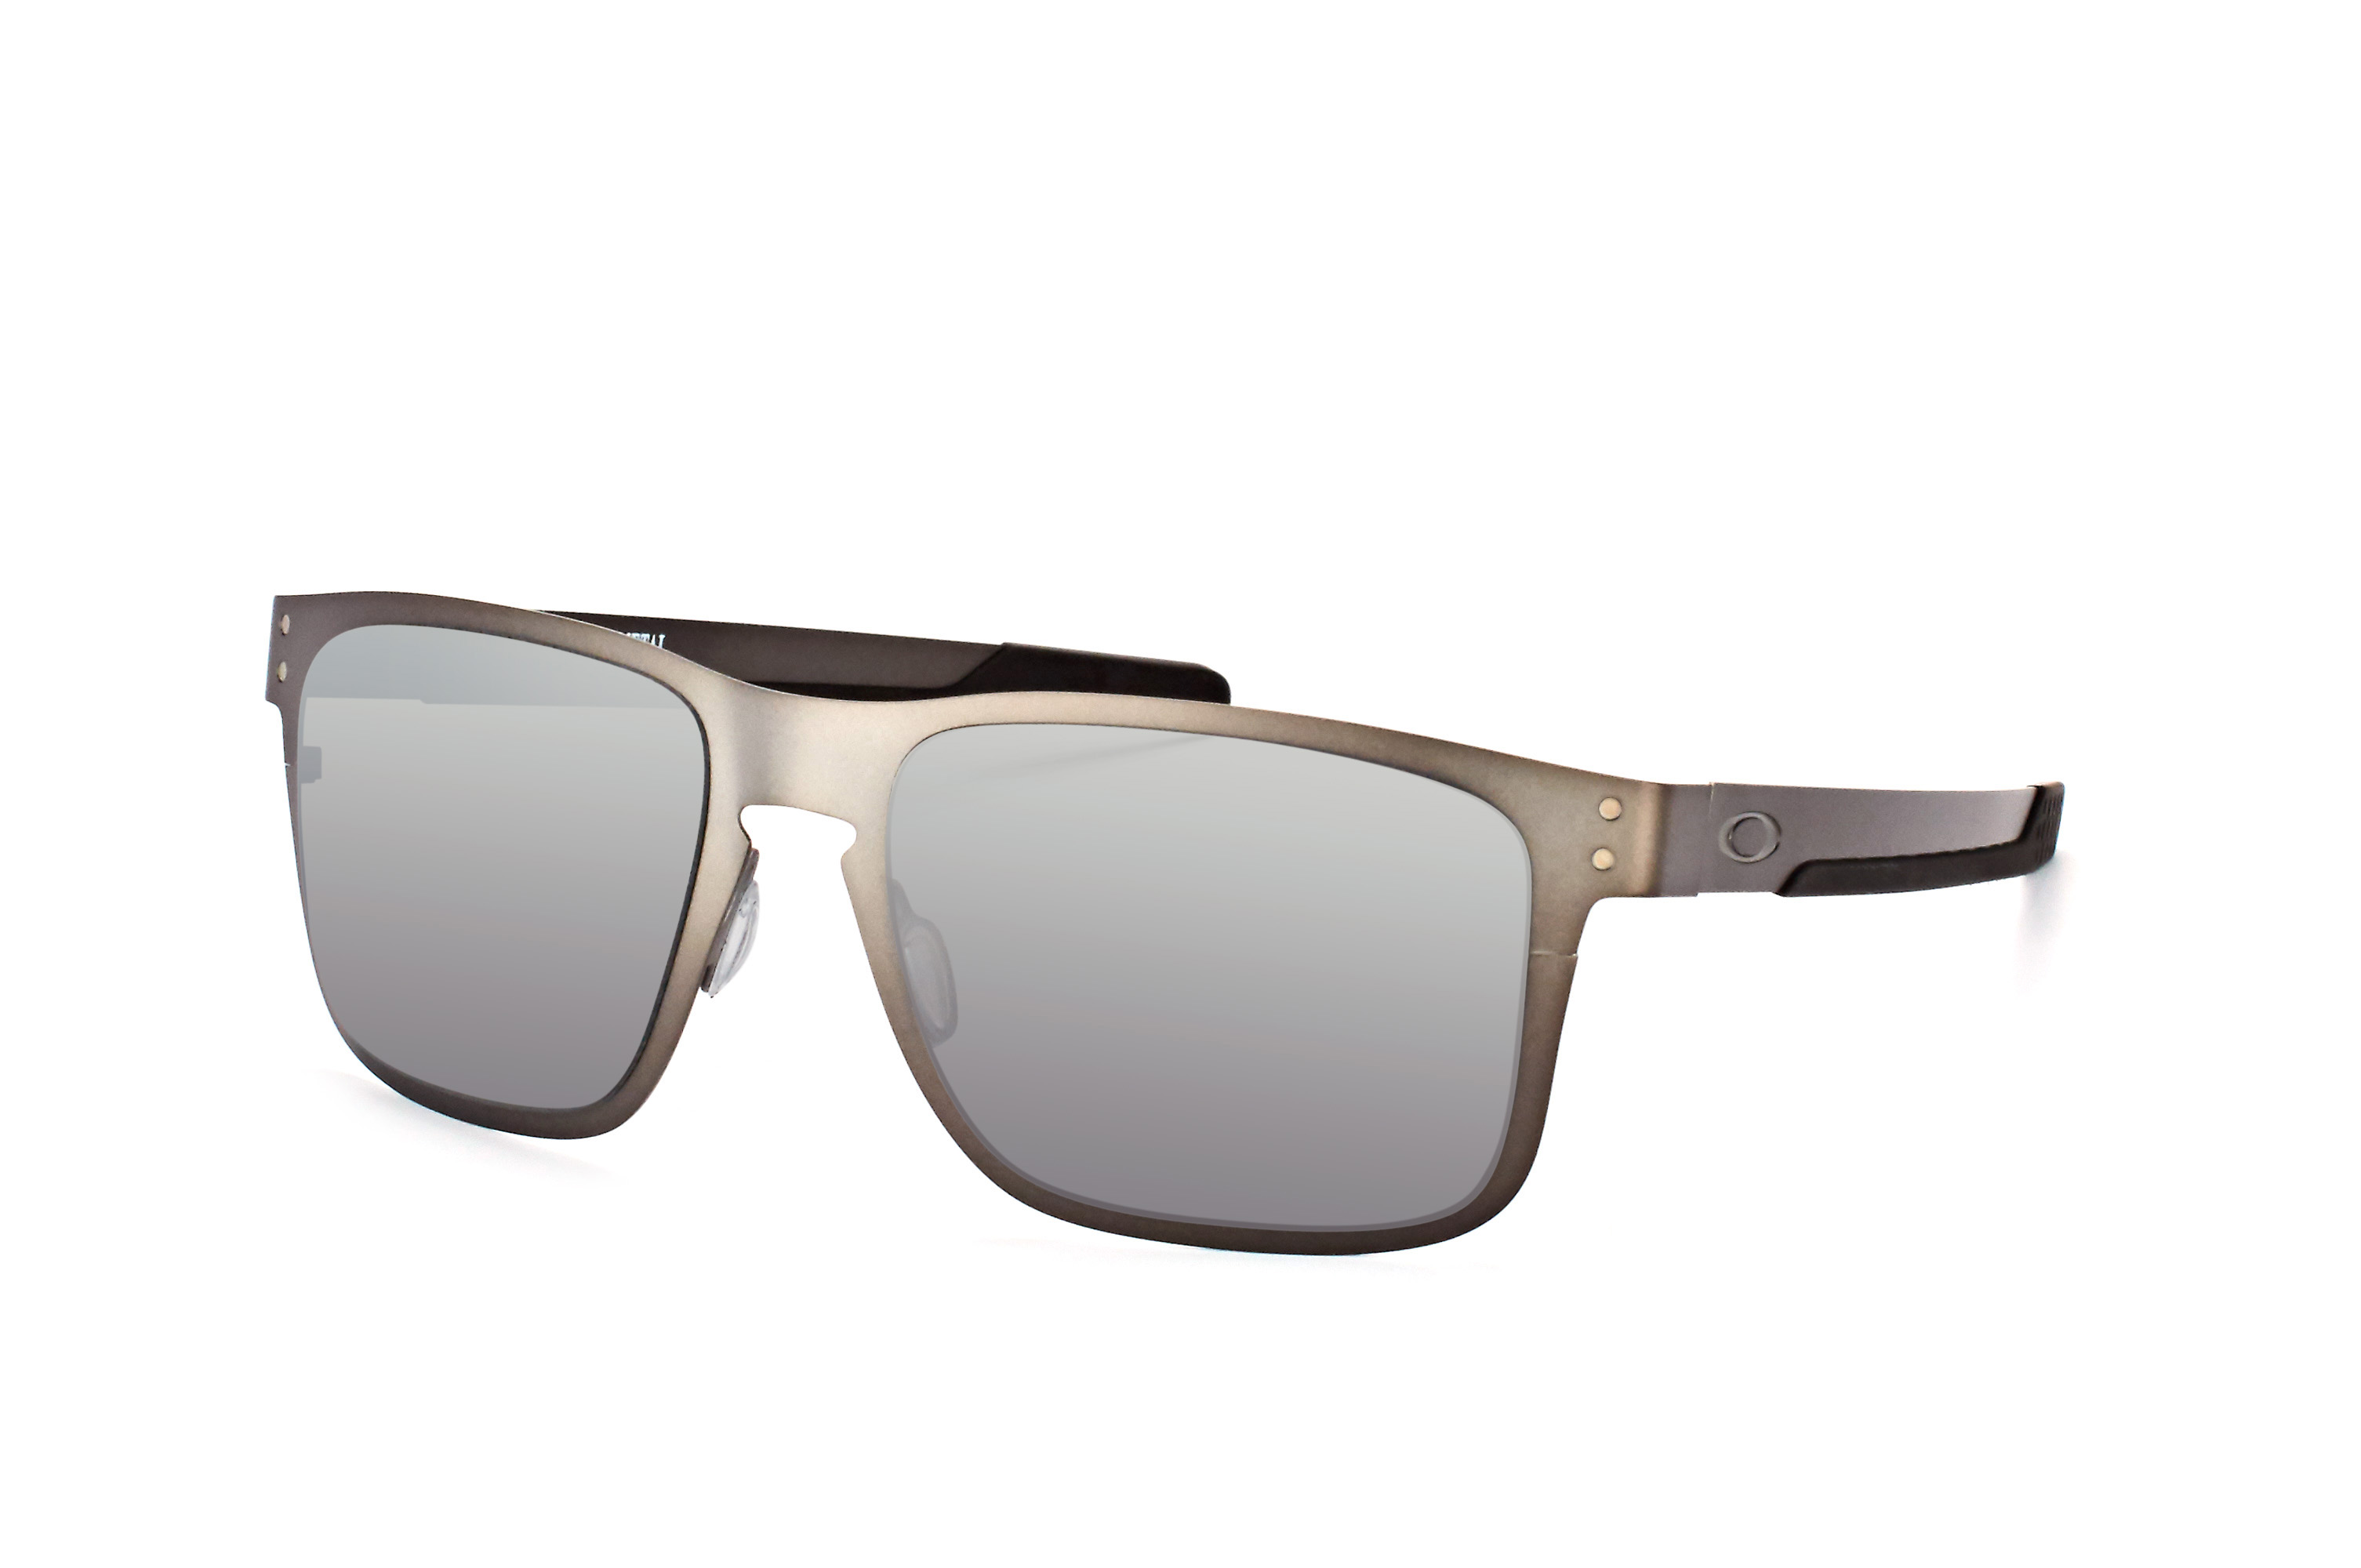 Buy Oakley Holbrook Metal OO 4123 06 Sunglasses